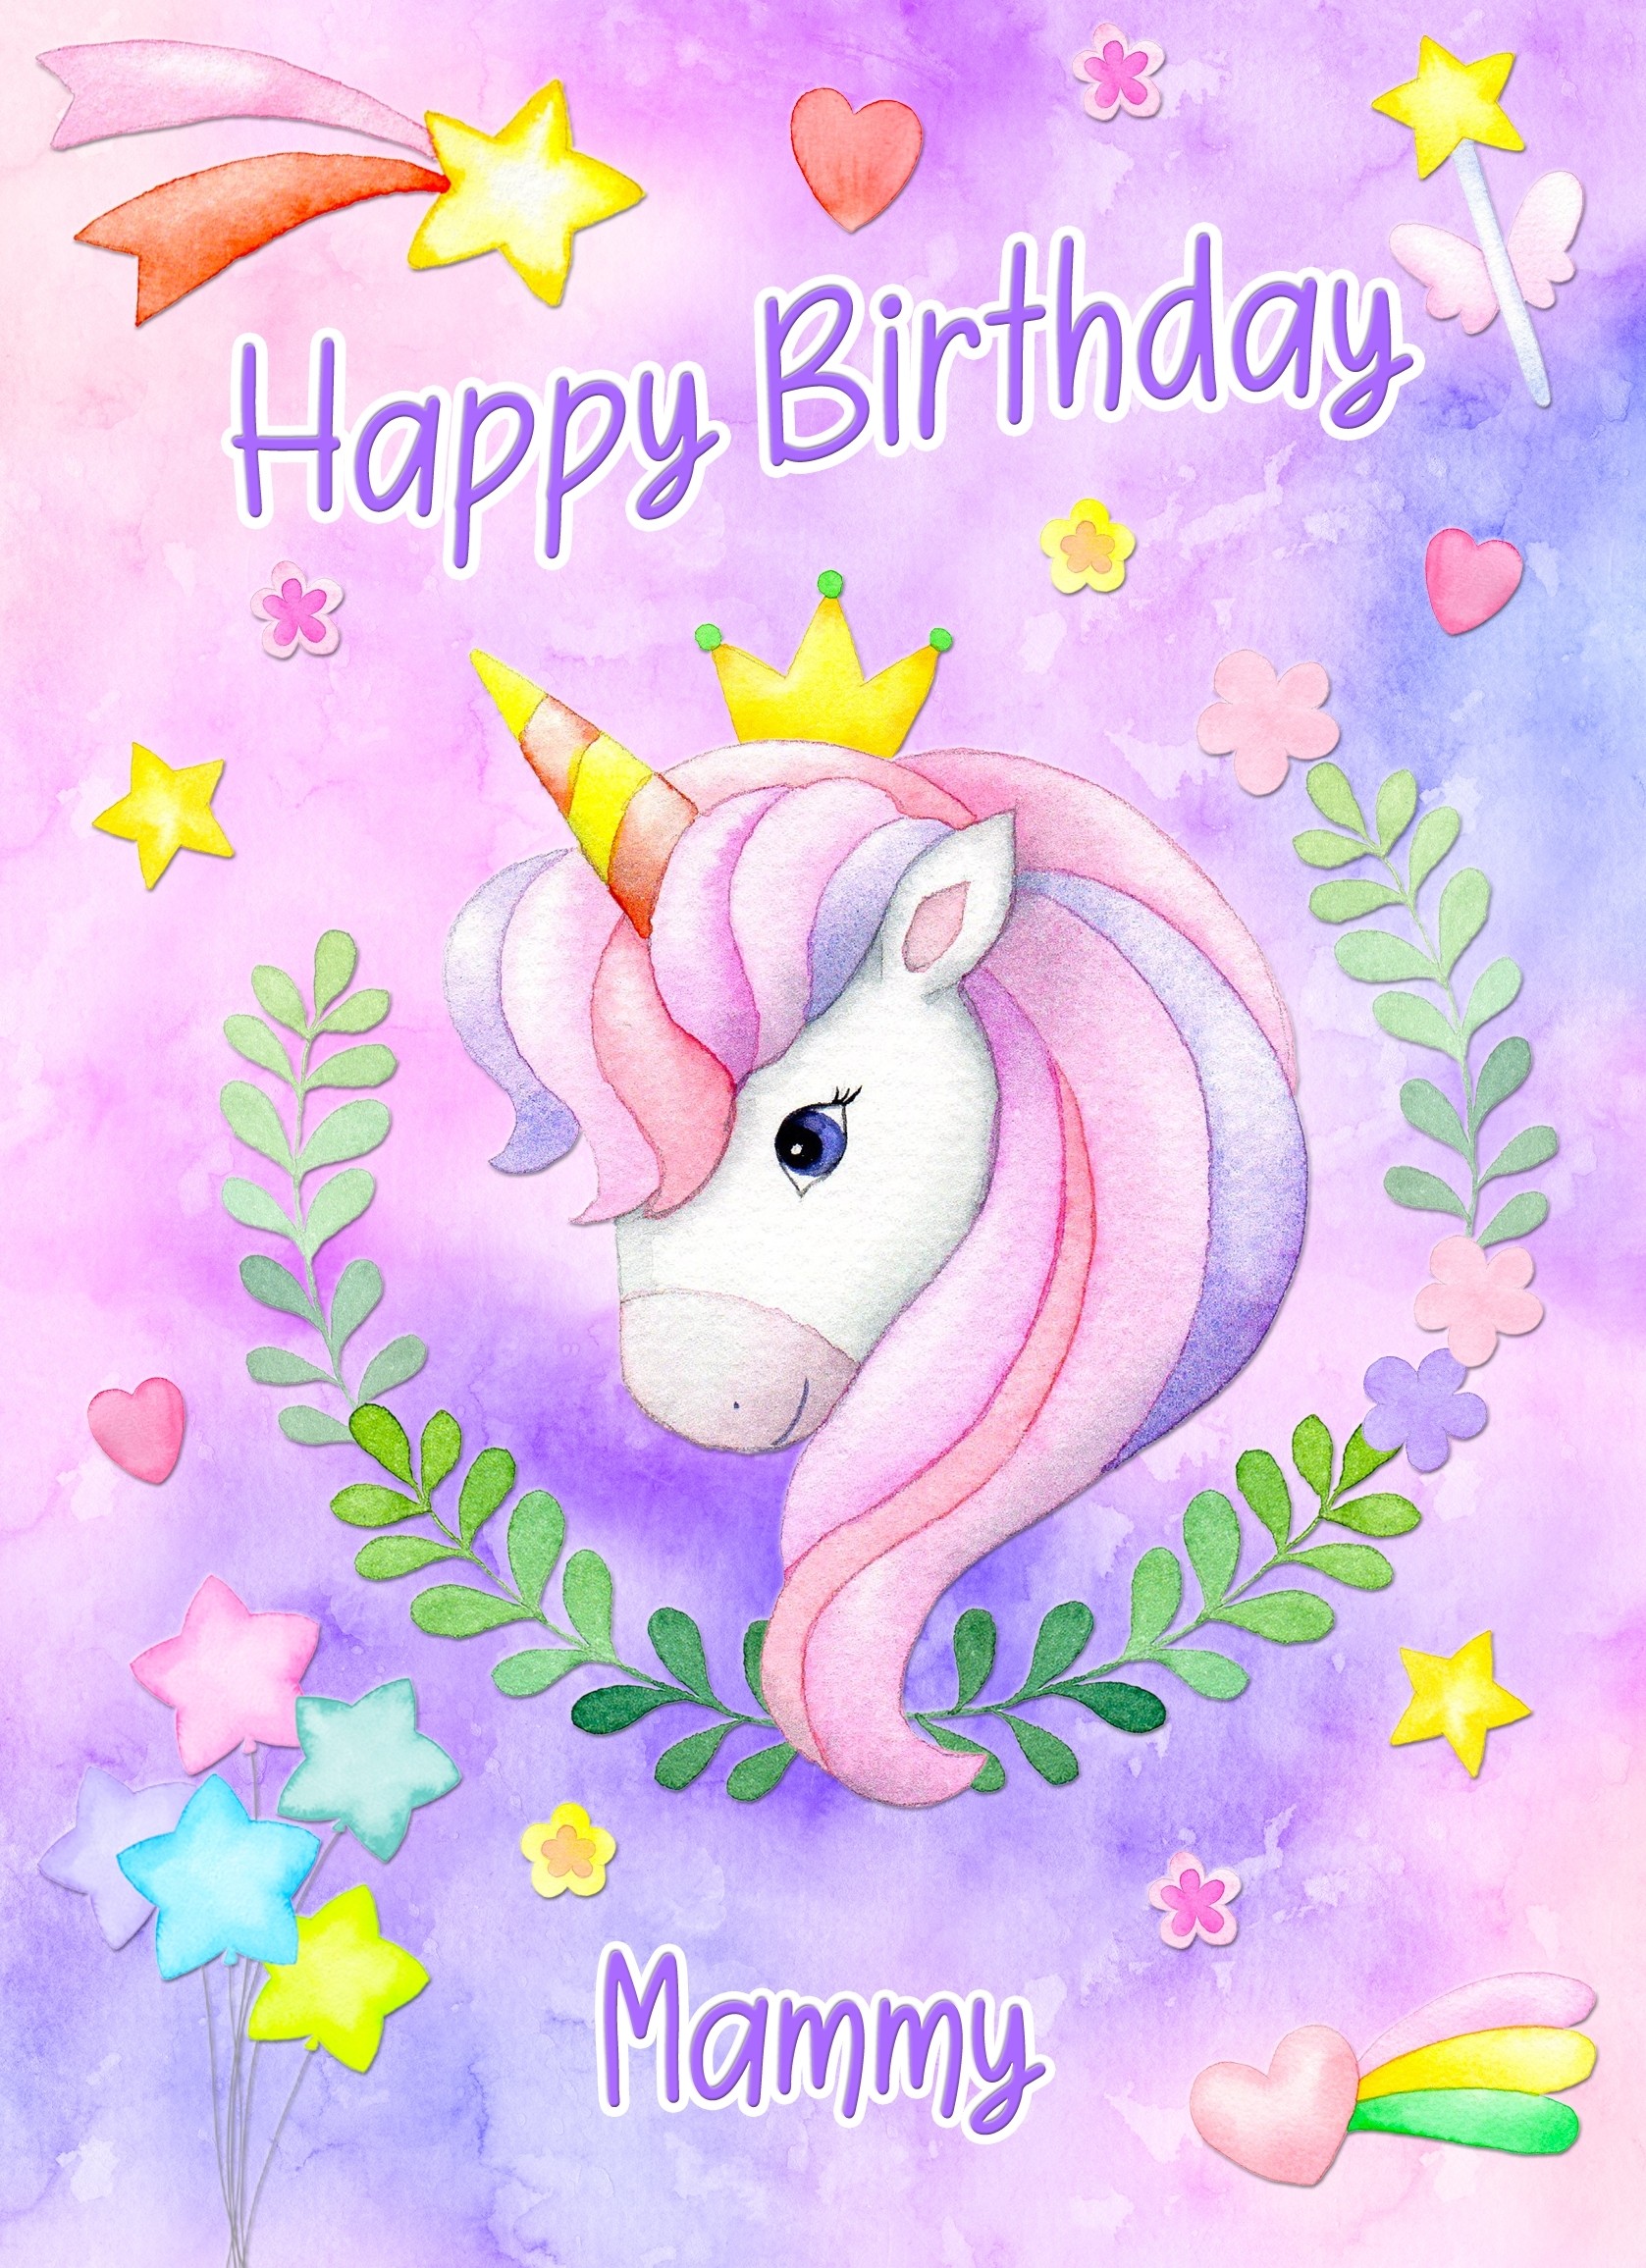 Birthday Card For Mammy (Unicorn, Lilac)